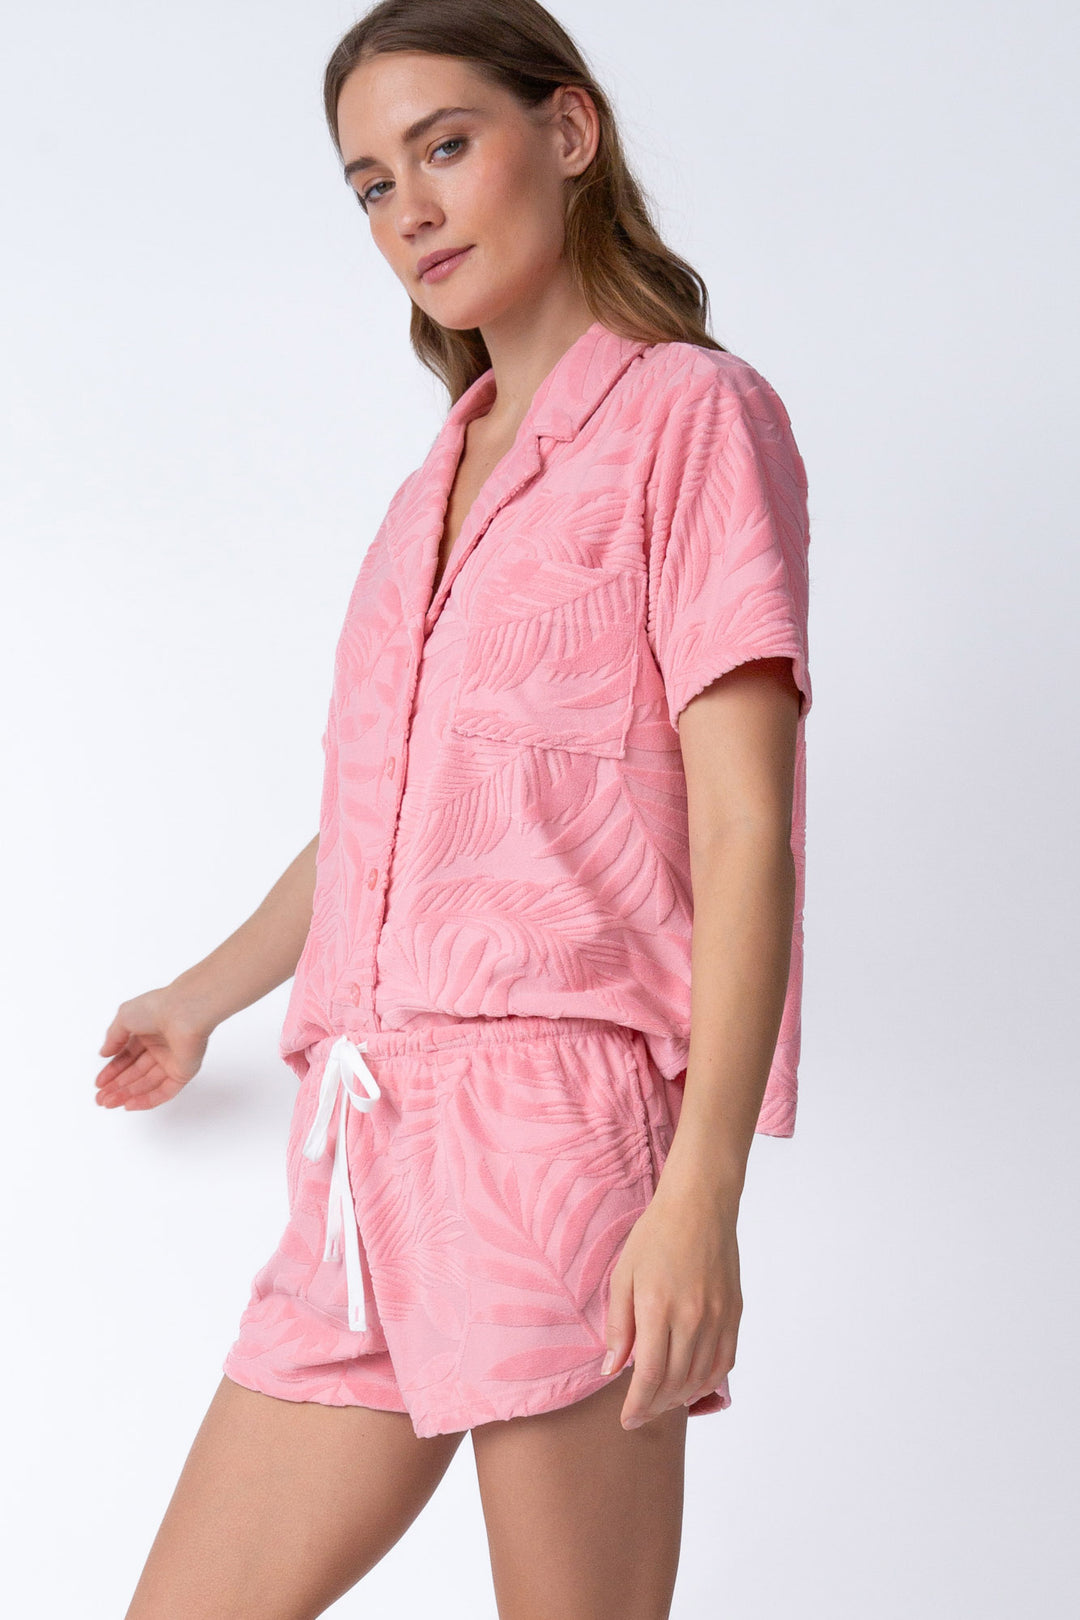 Women's lounge set - matching button-top & short in matching pink jacquard terry knit.